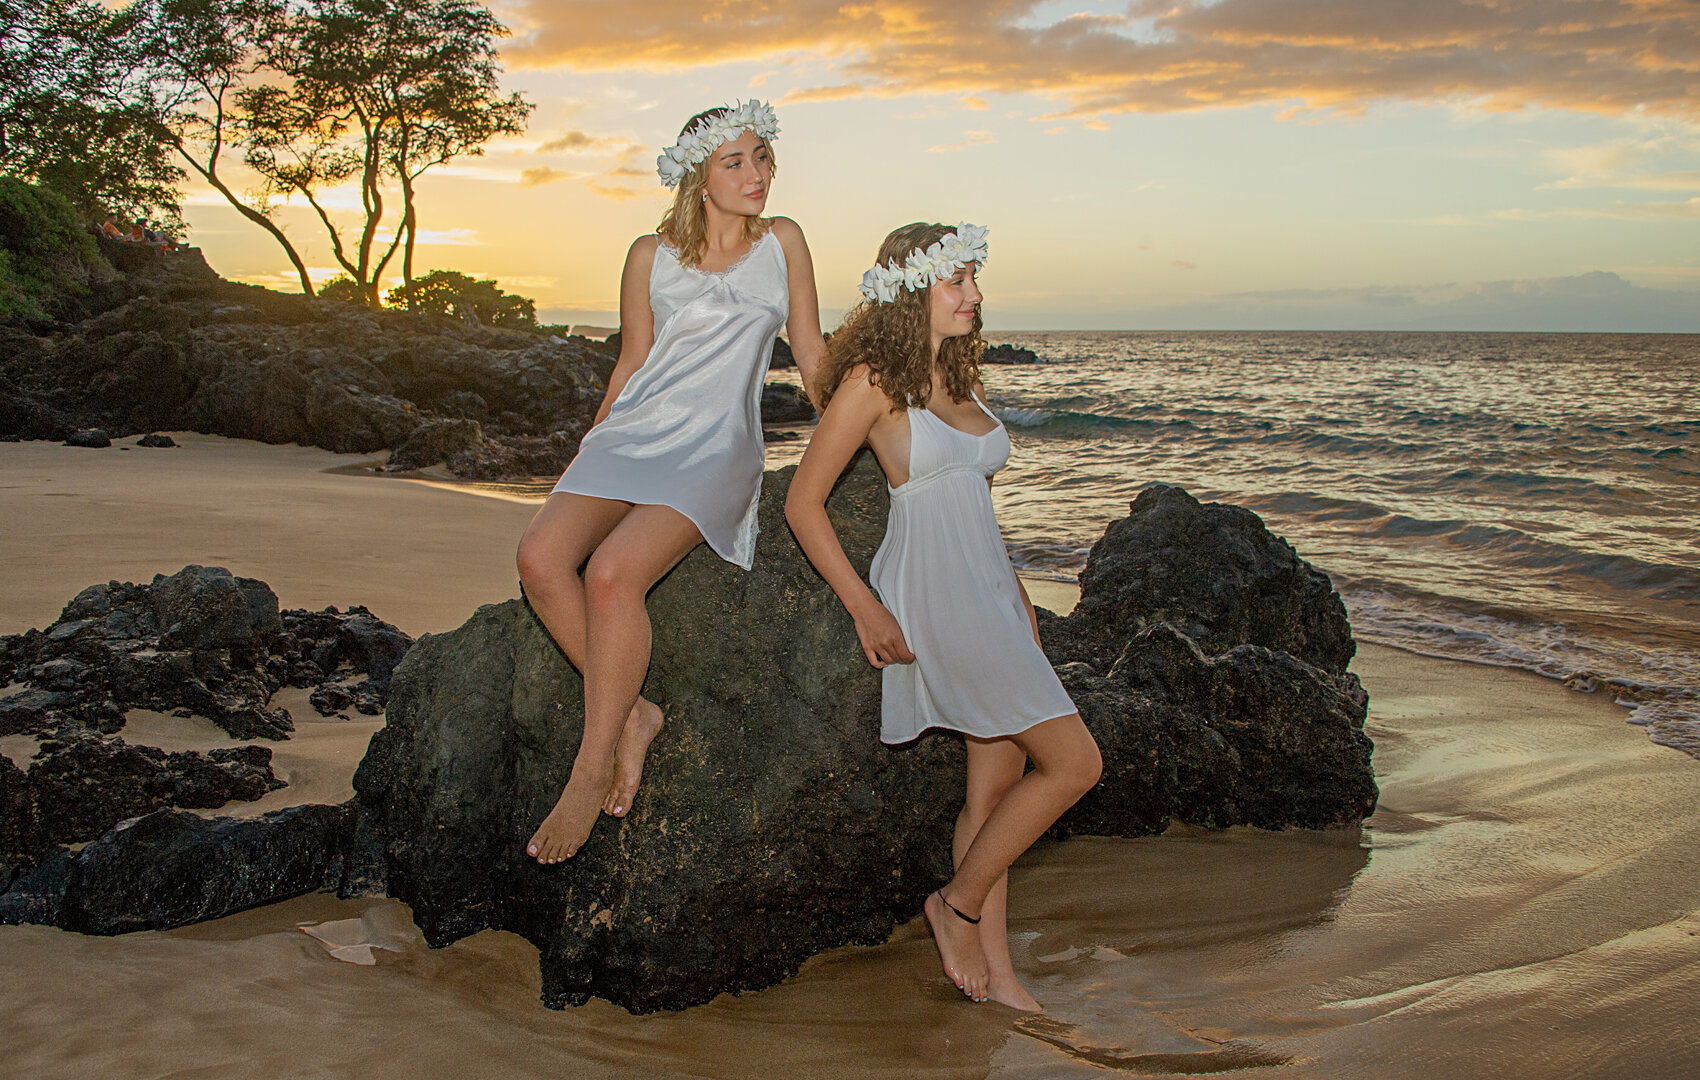 Engagement photography on Maui